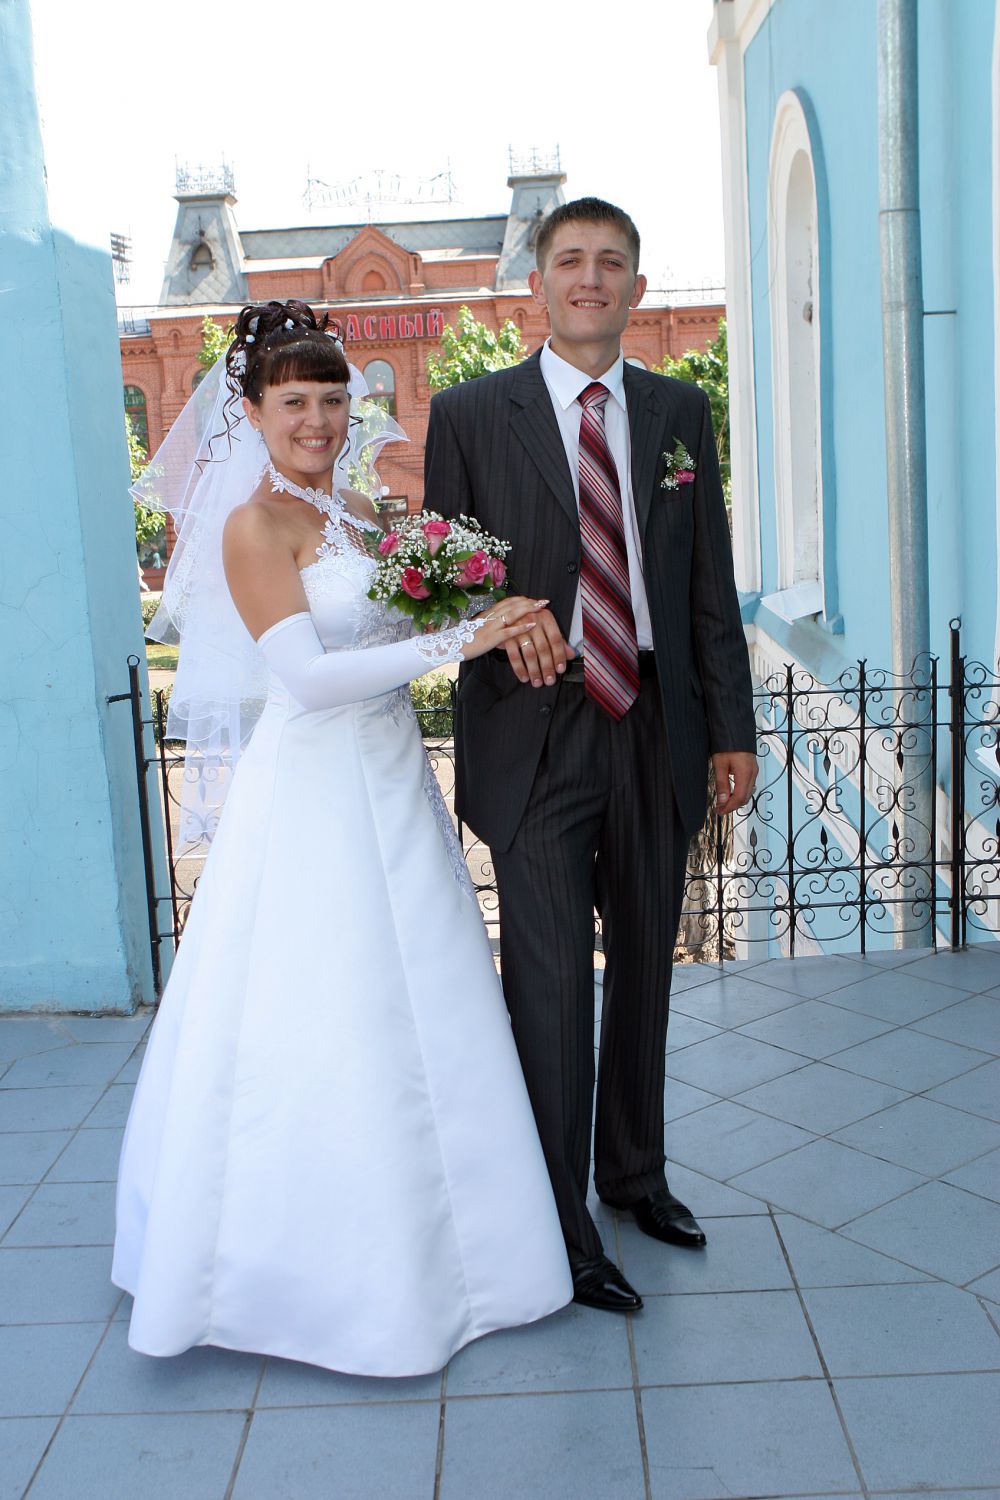 Пара №8. Вячеслав и Валентина Вебер, в браке 8 лет. Фото сделано в 2007 году.